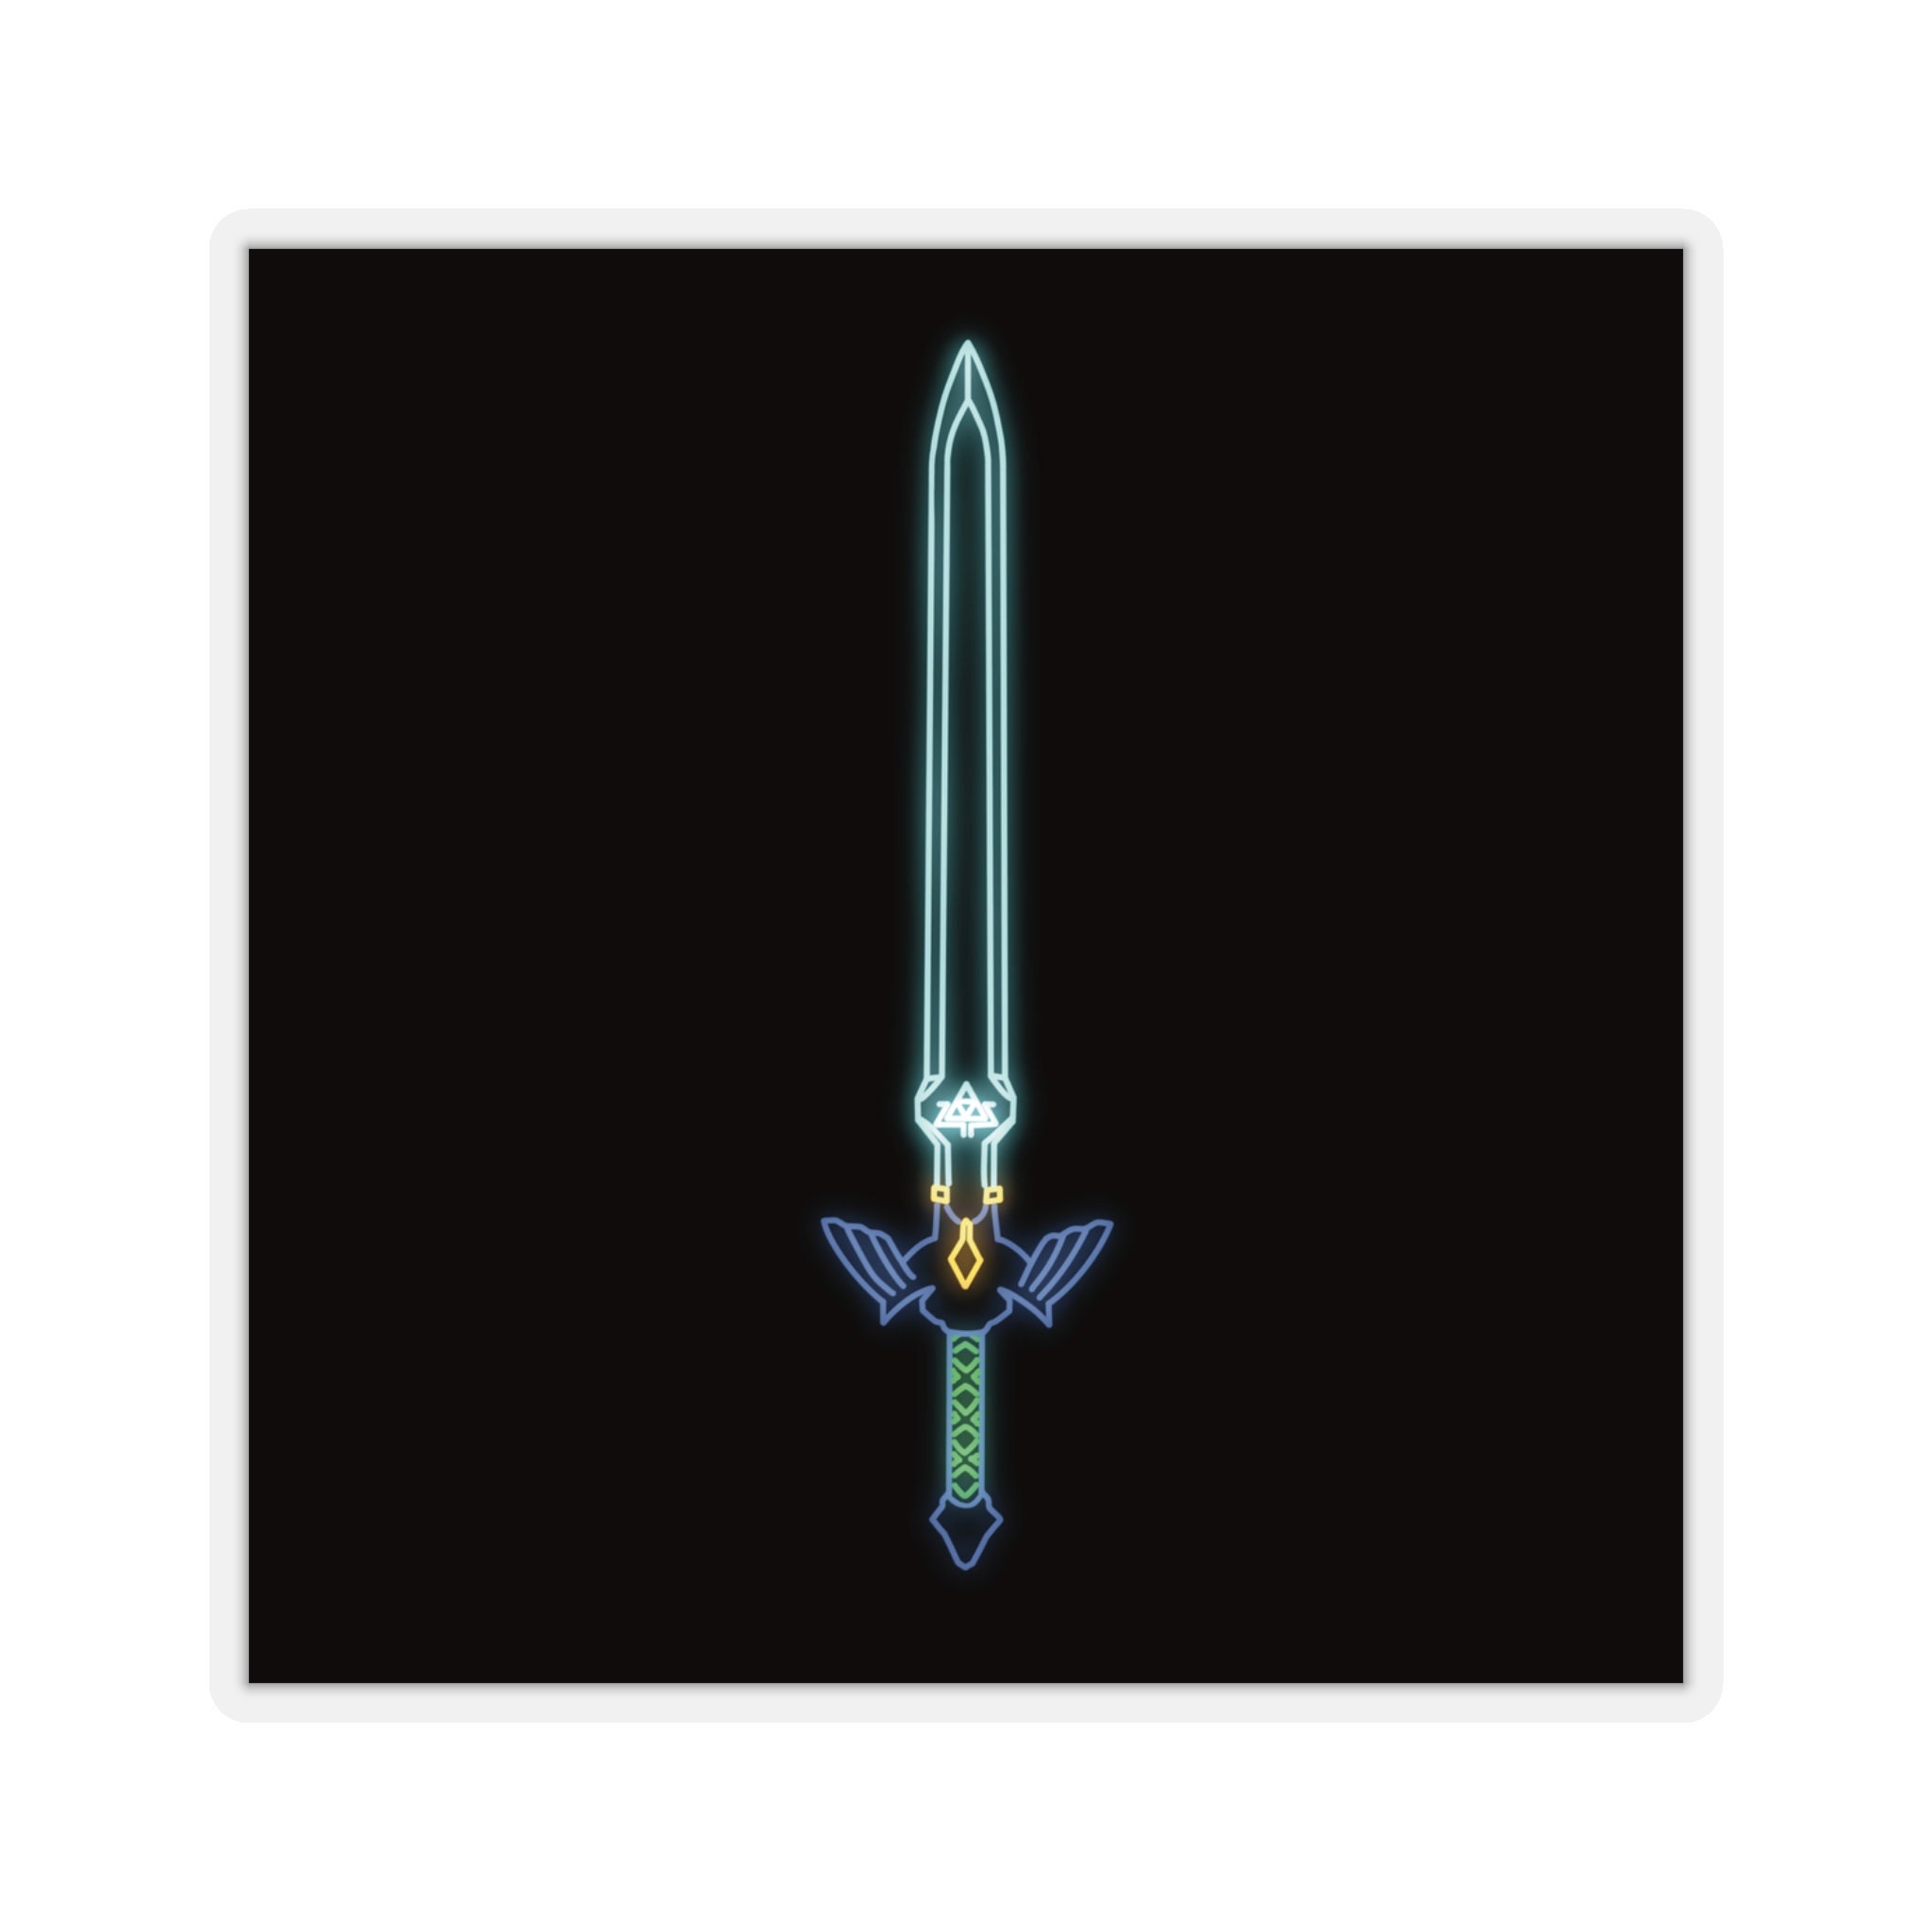 Terraria Muramasa Sword Design Sticker for Sale by